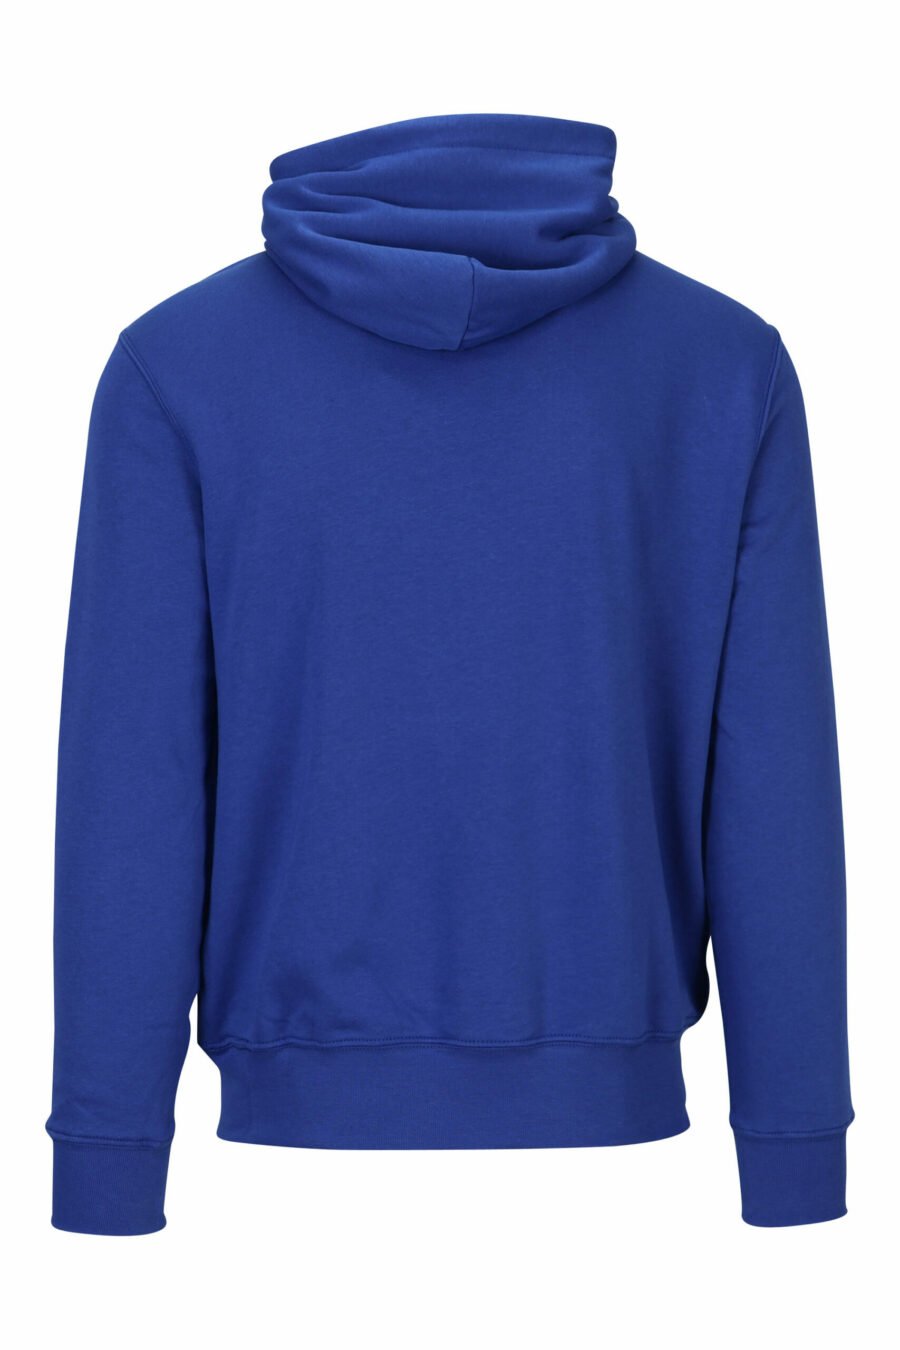 Dark blue hooded sweatshirt with maxilogo "polo bear" - 3616535915008 1 scaled